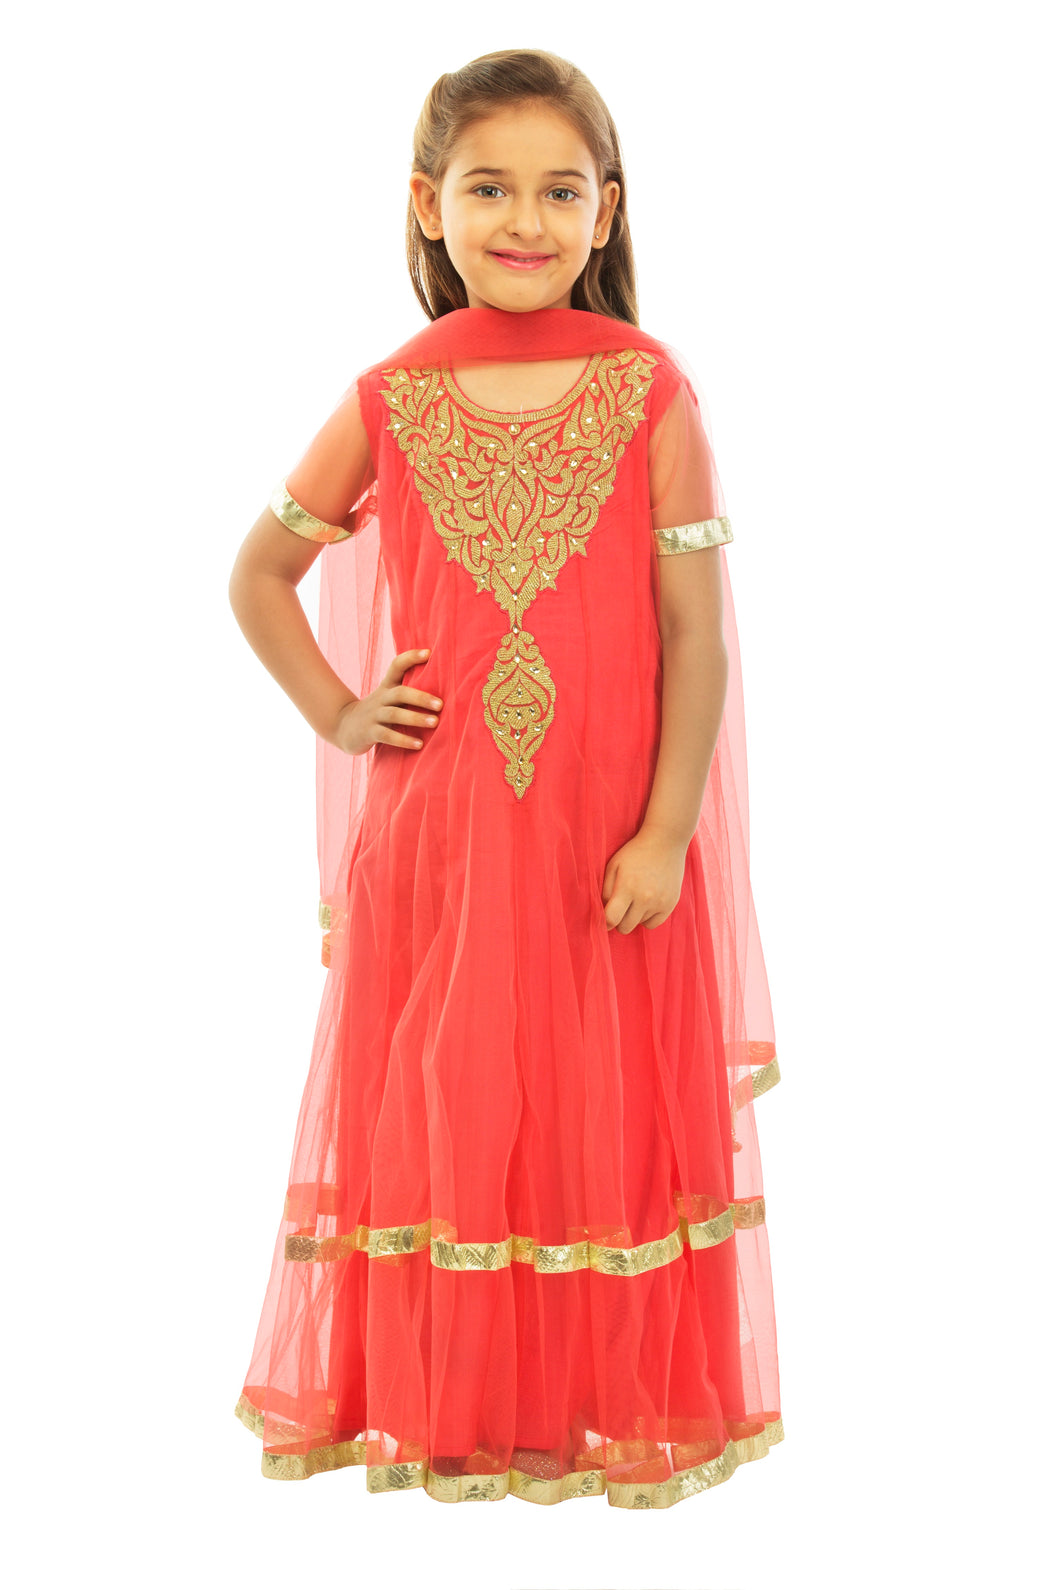 Girls Red Anarkali Suit With Churidaar